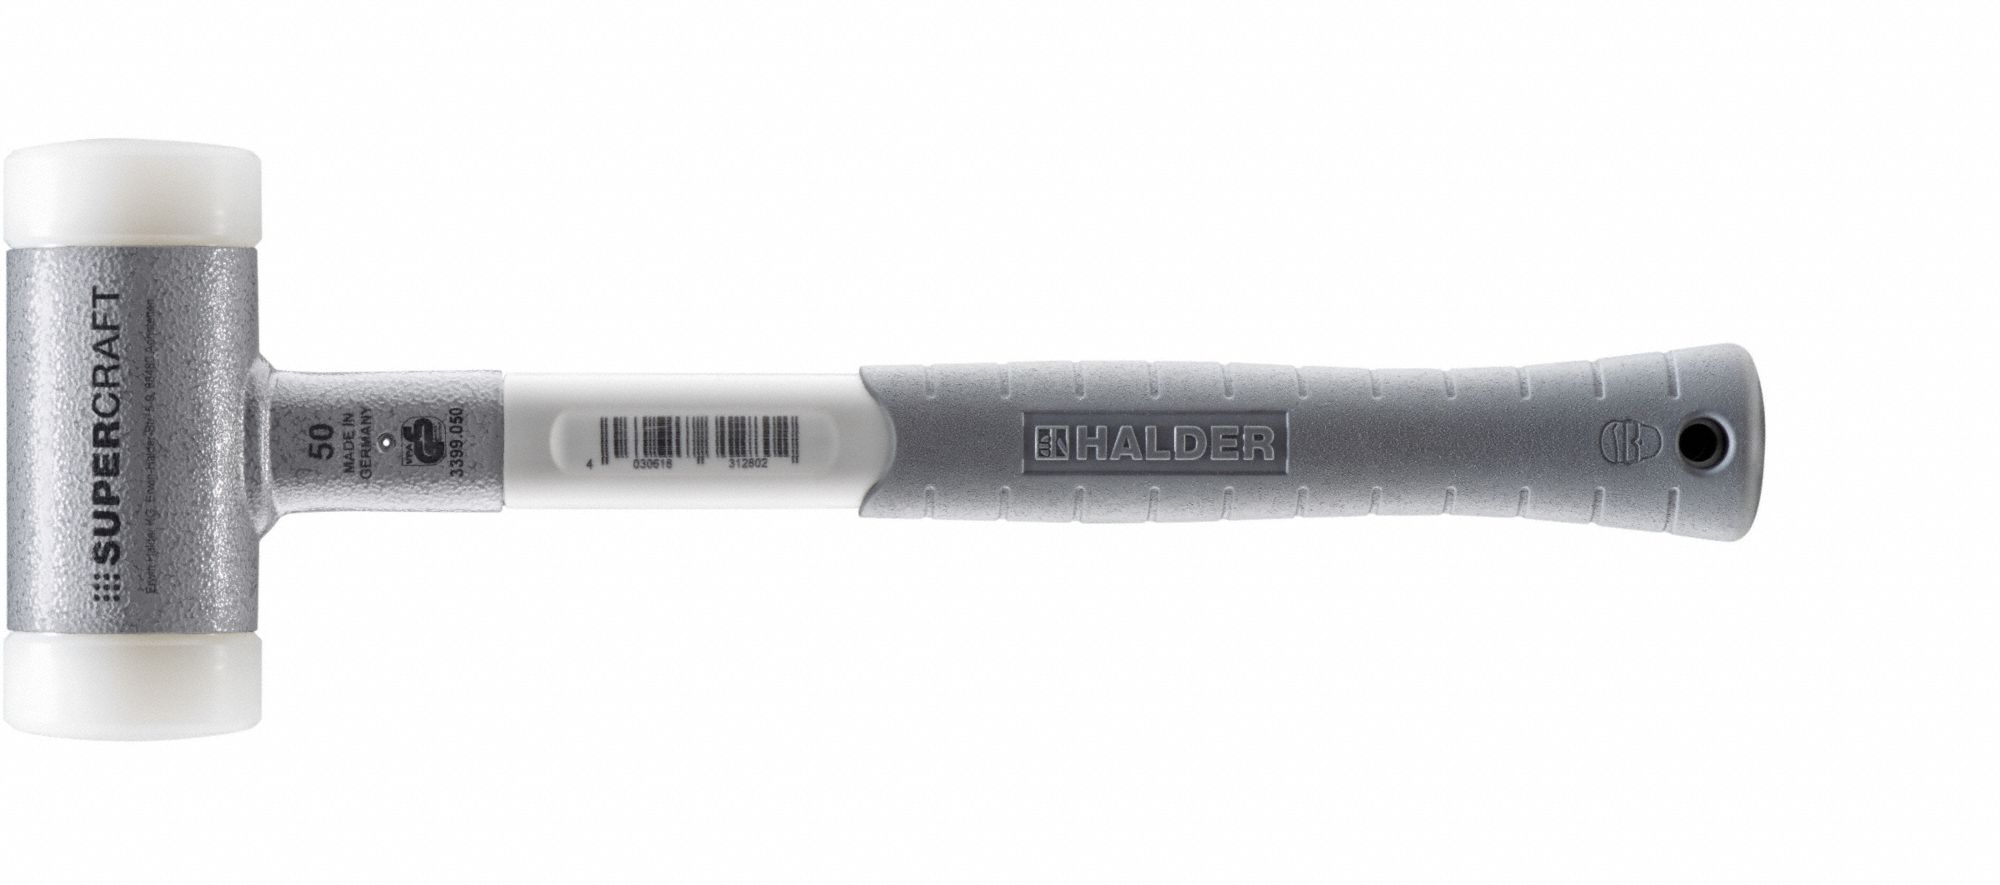 Deadblow, hammer, mallet, Non-Rebound: Fiberglass Handle, Textured Grip, 36 oz Head Wt, Steel